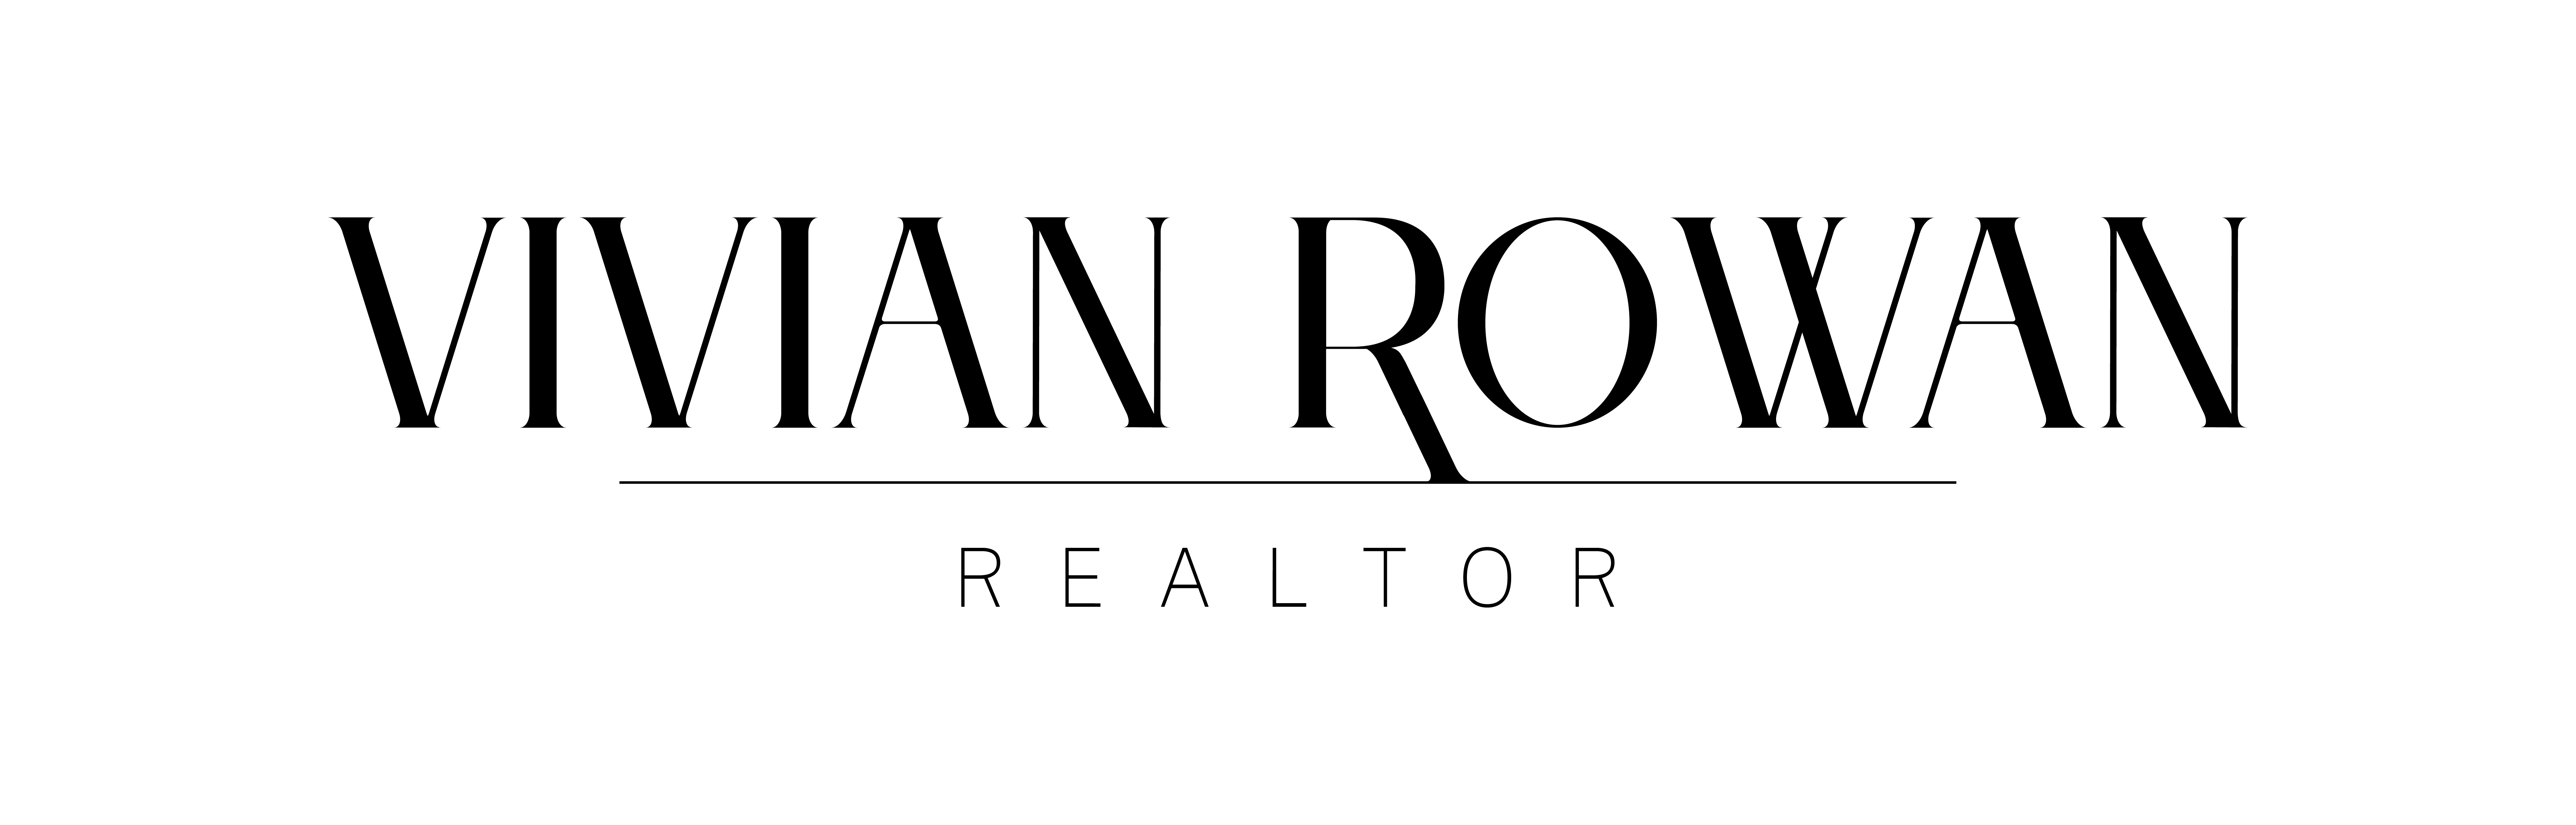 Vivian Rowan Realtor Logo Transparent